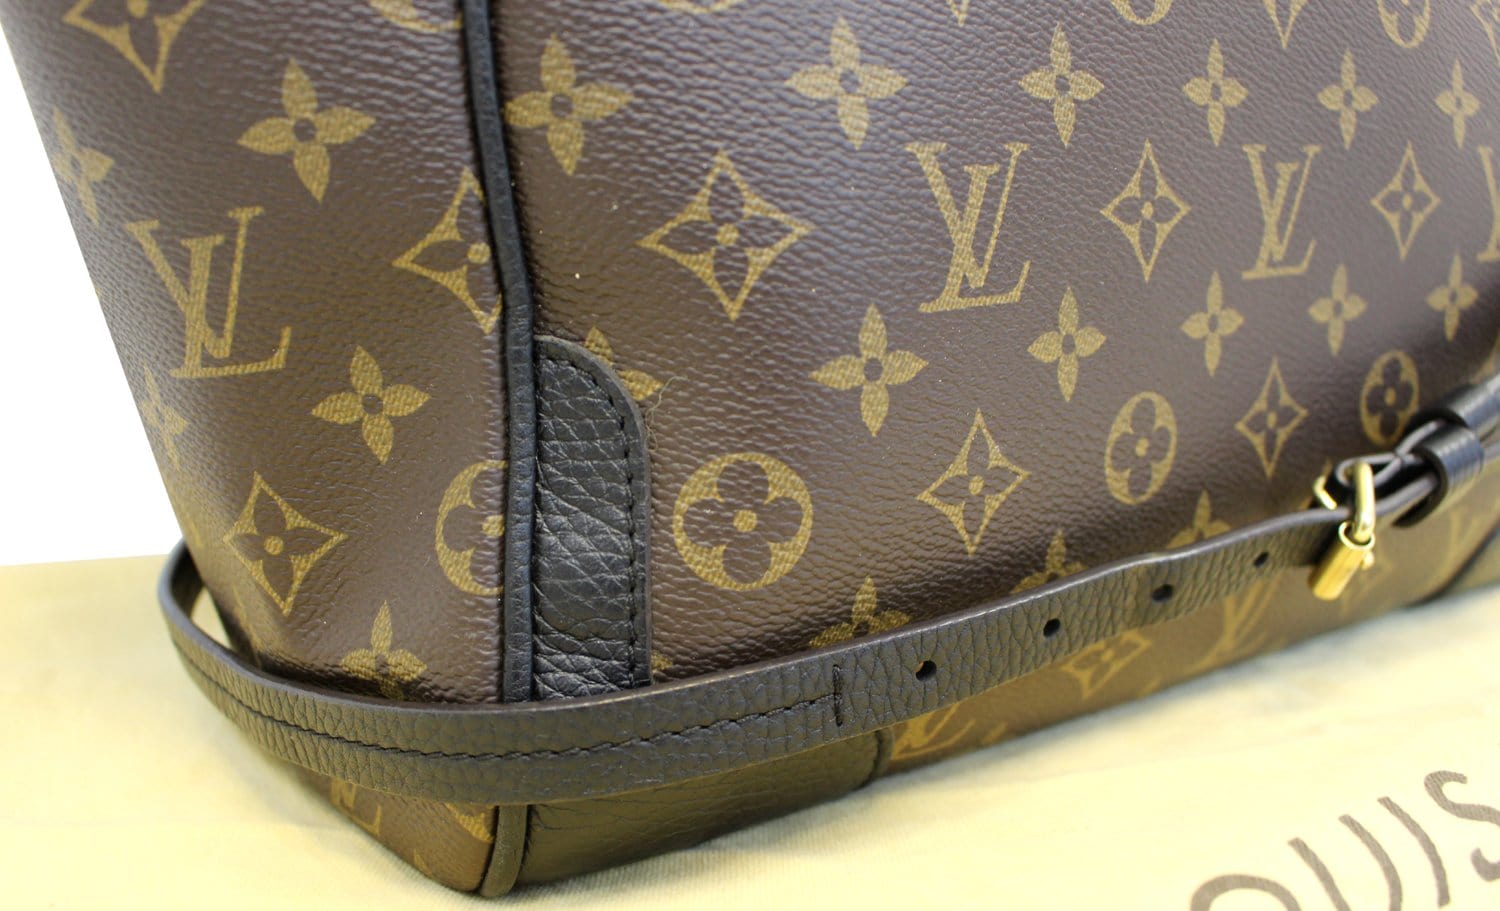 Louis Vuitton Black Colorful Bags & Handbags for Women